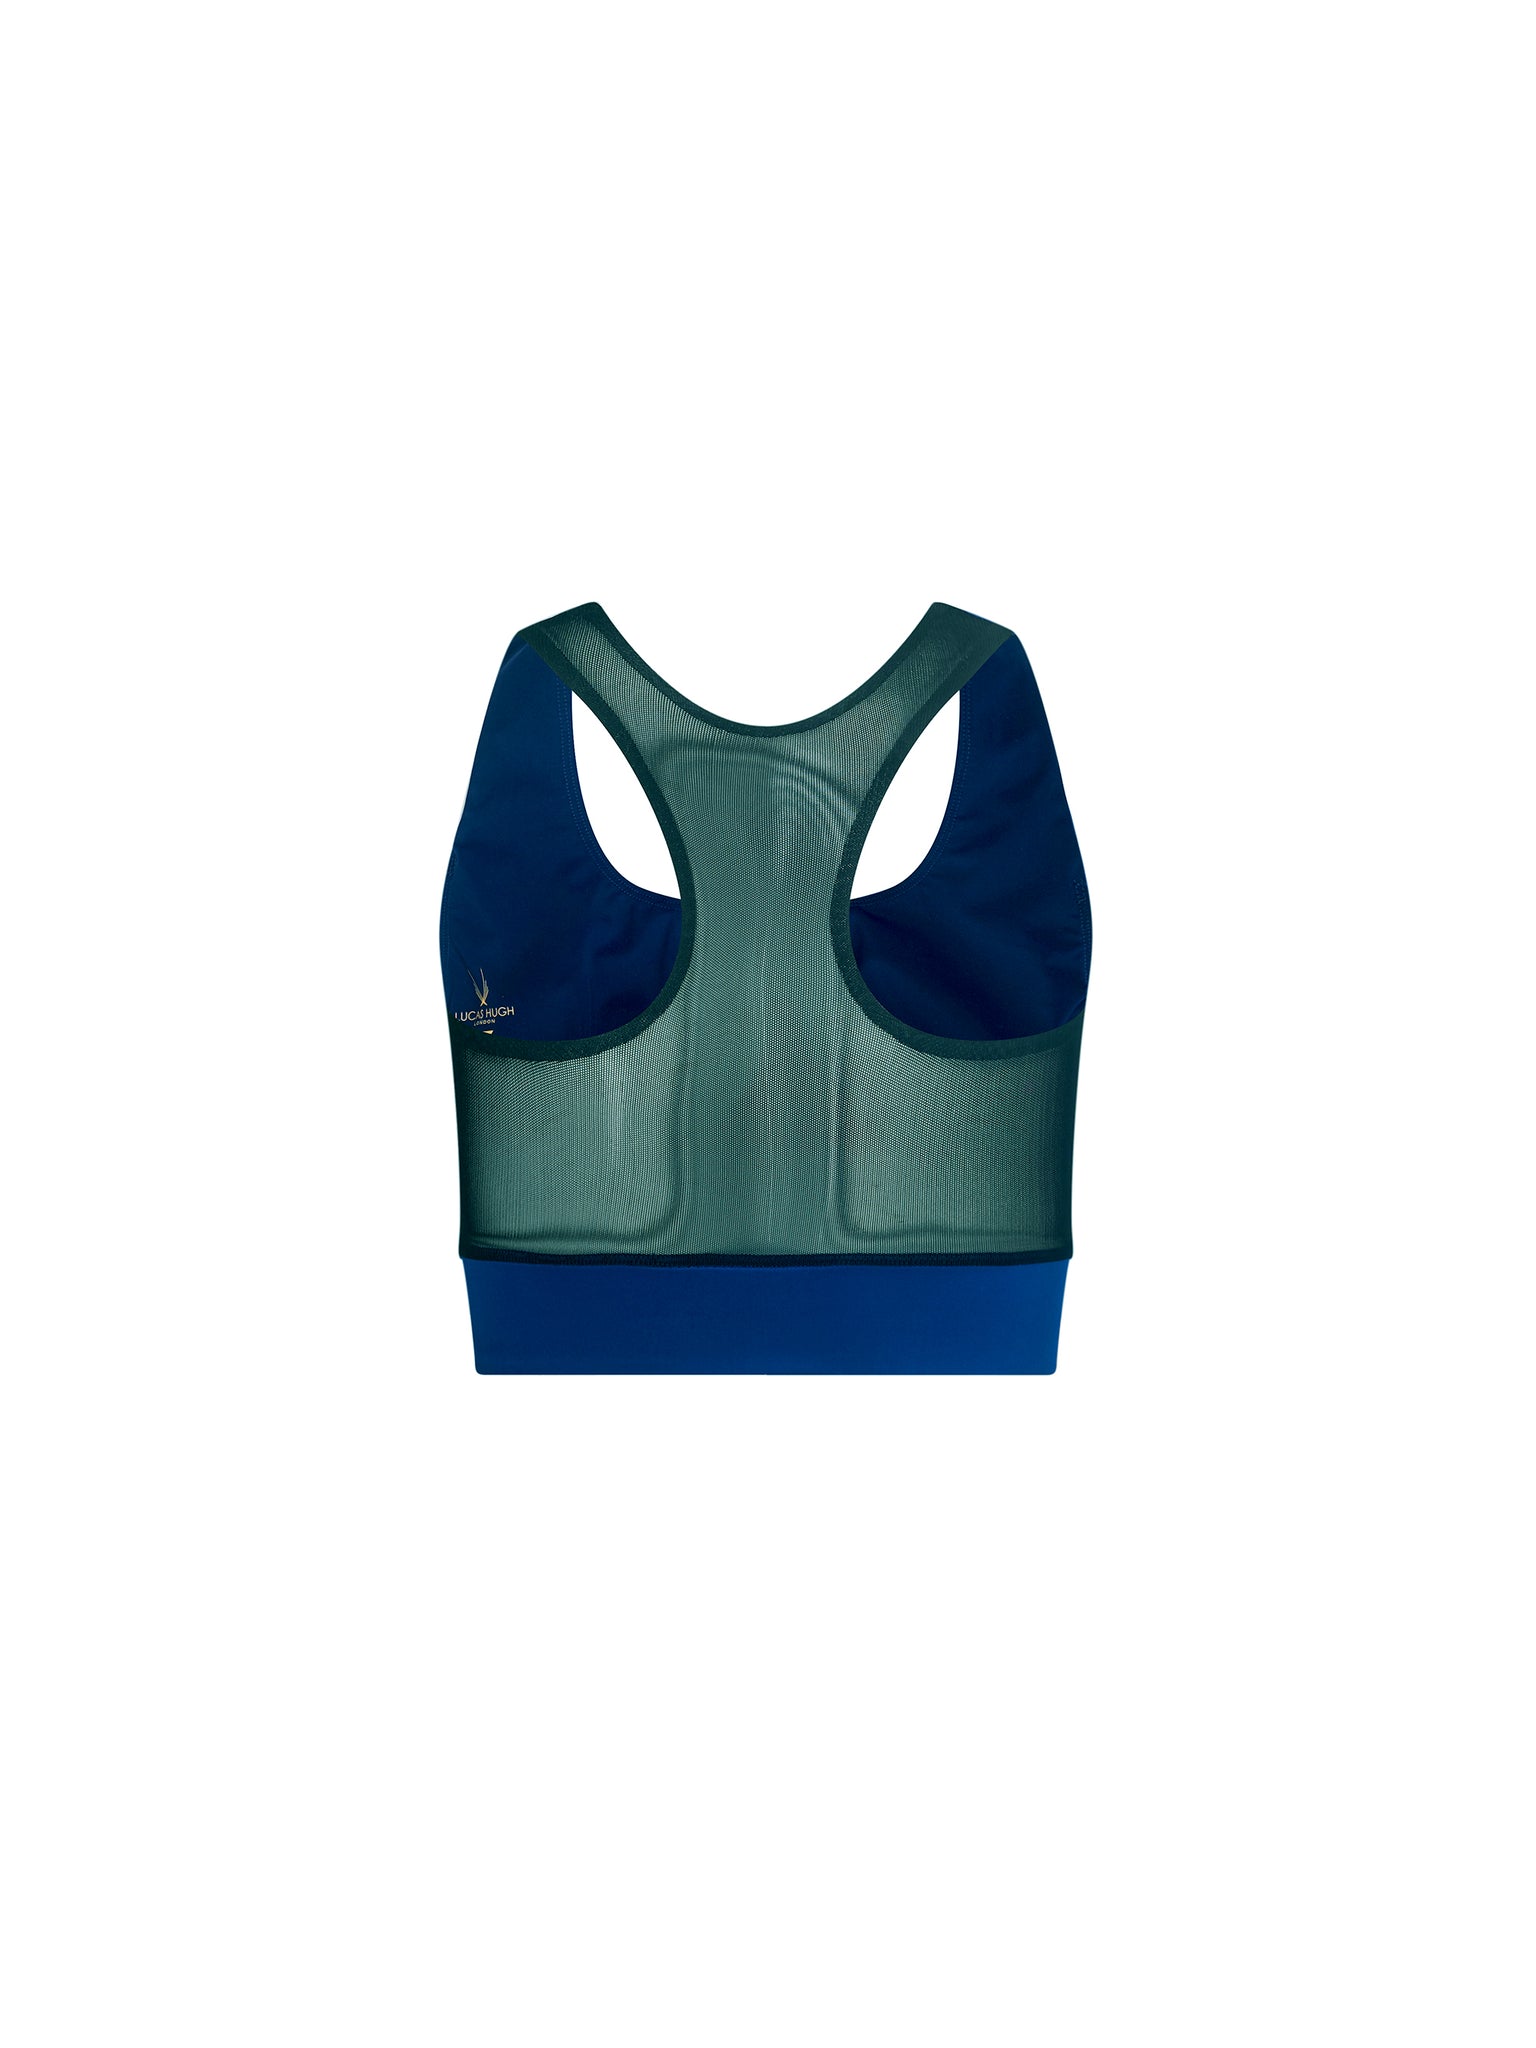 Ryca sport bra womens size large training blue Race back padded activewear